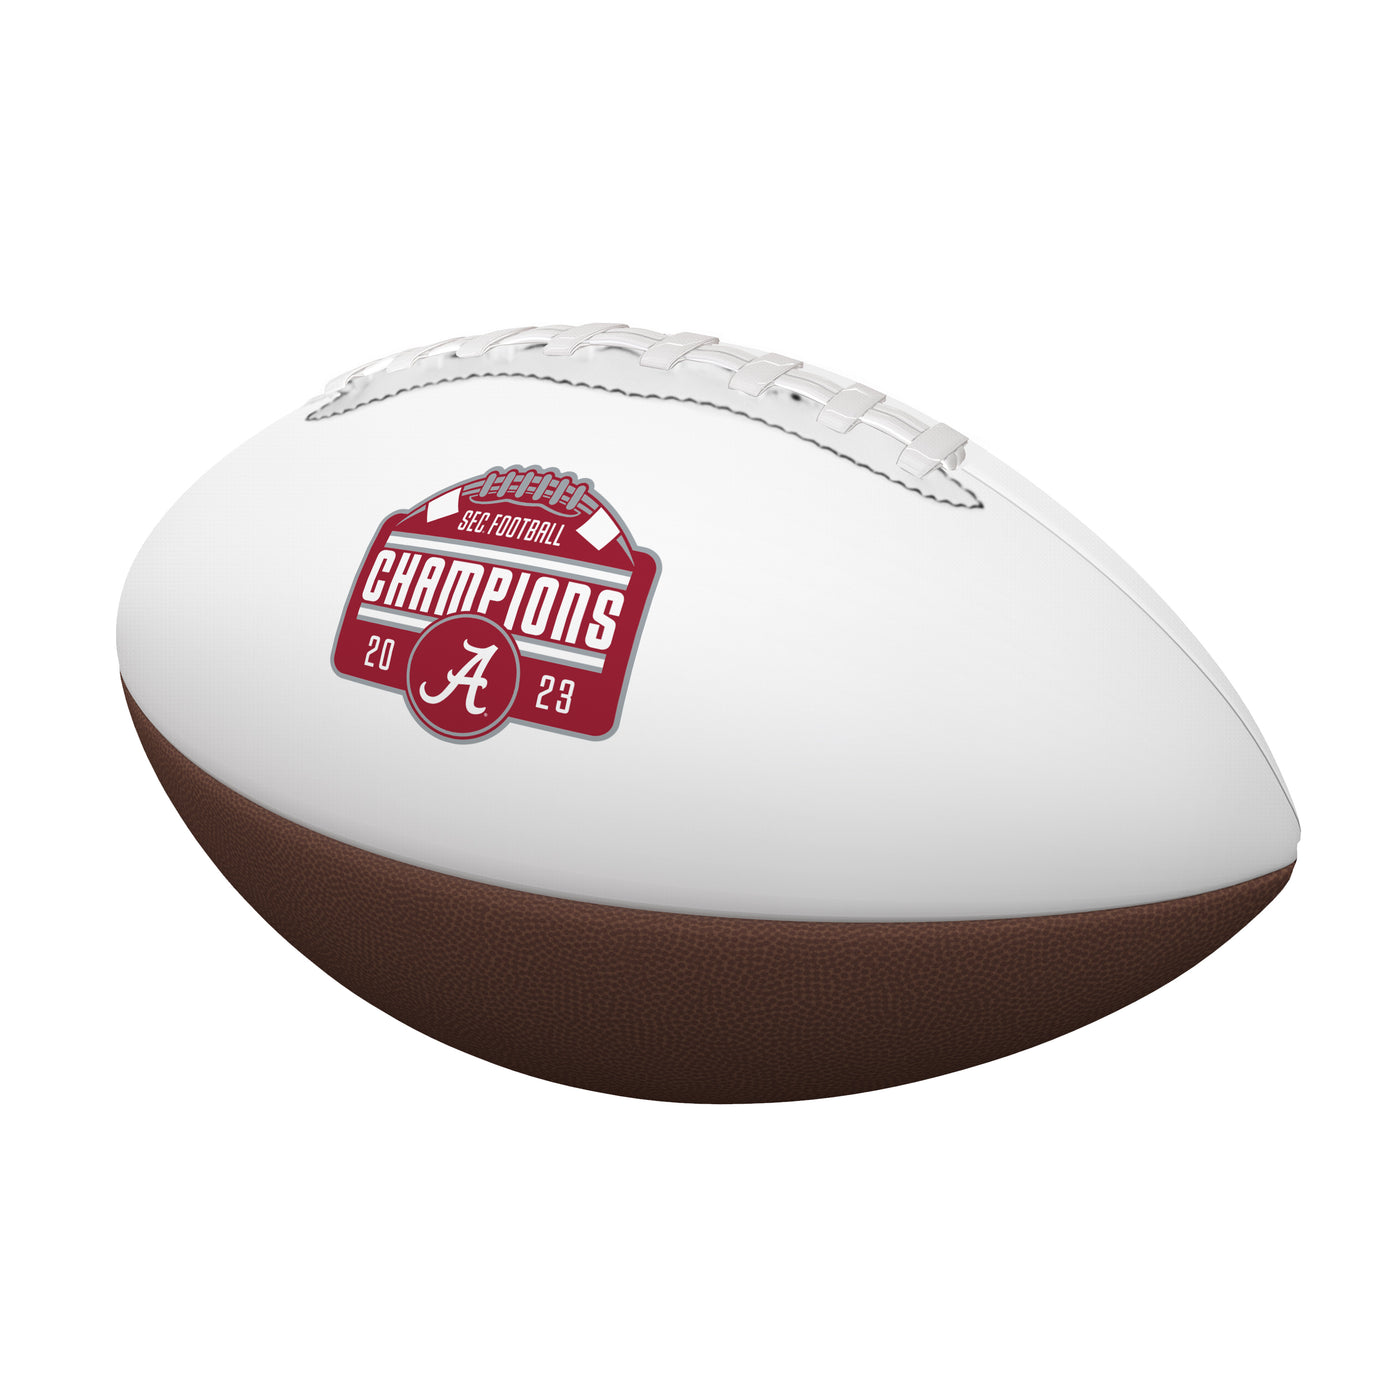 Alabama 2023 SEC Champions Full Size Autograph Football